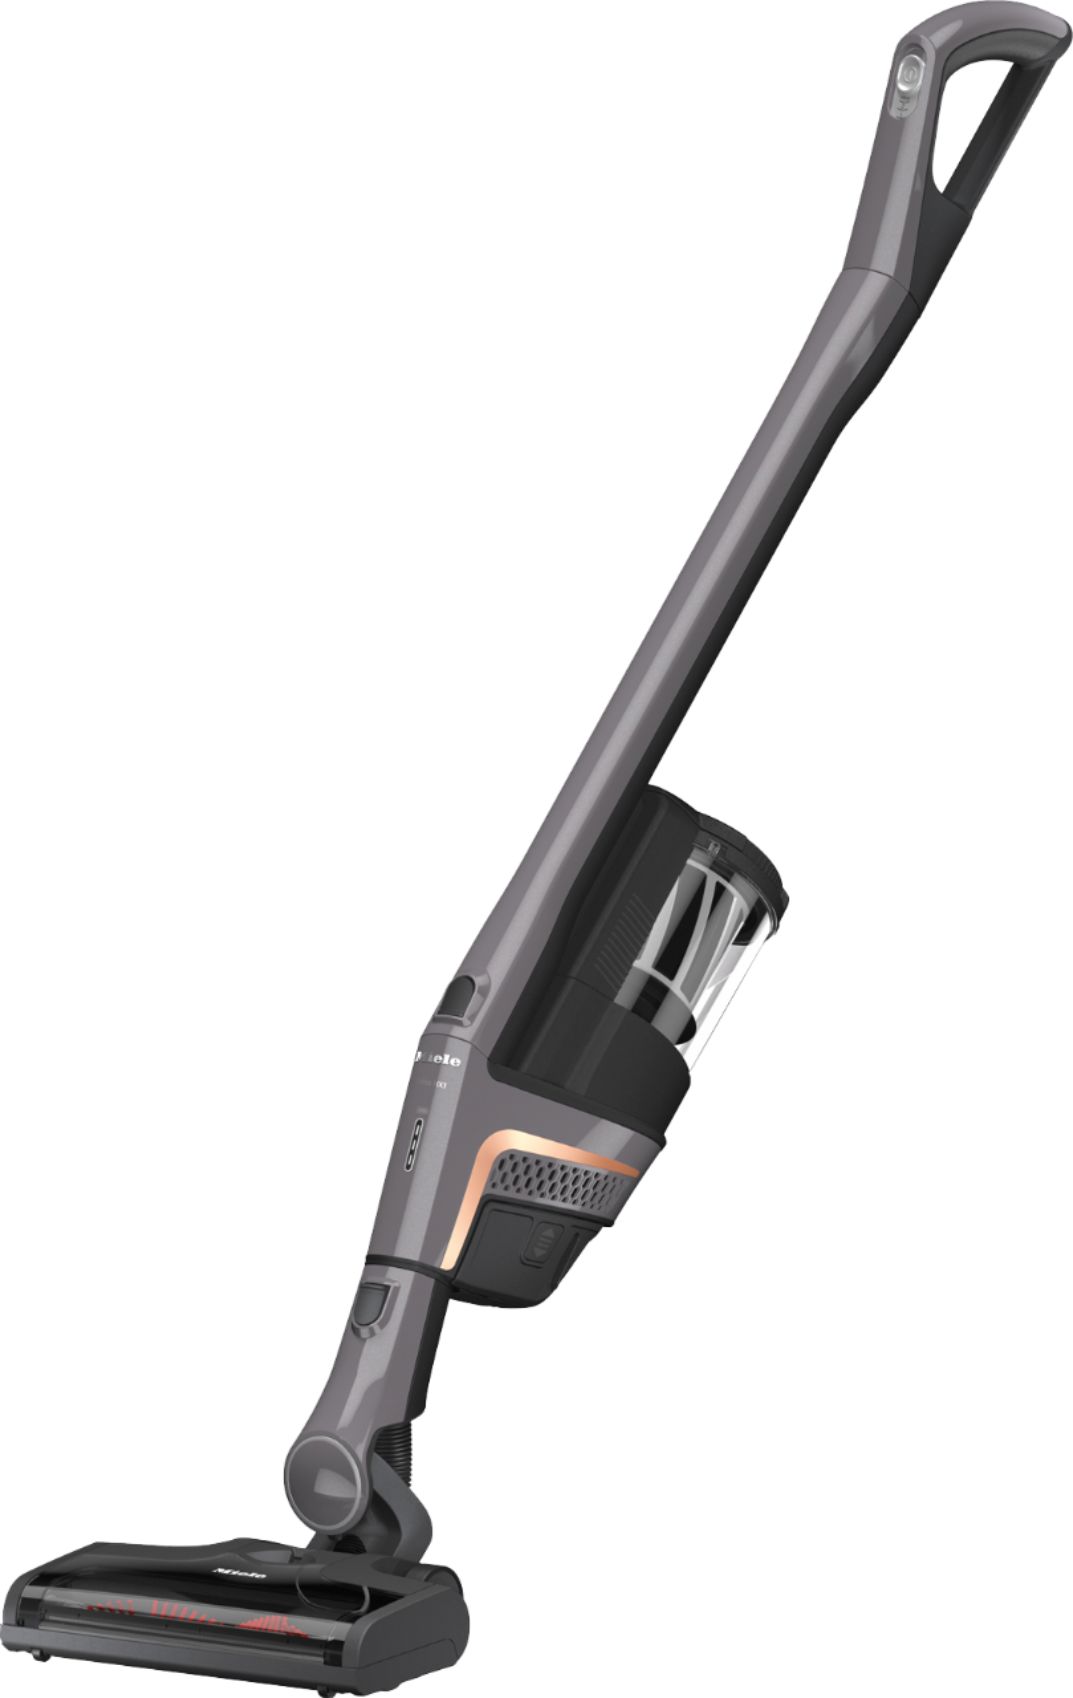 Angle View: Samsung - Jet 75 Cordless Stick Vacuum - Titan ChroMetal